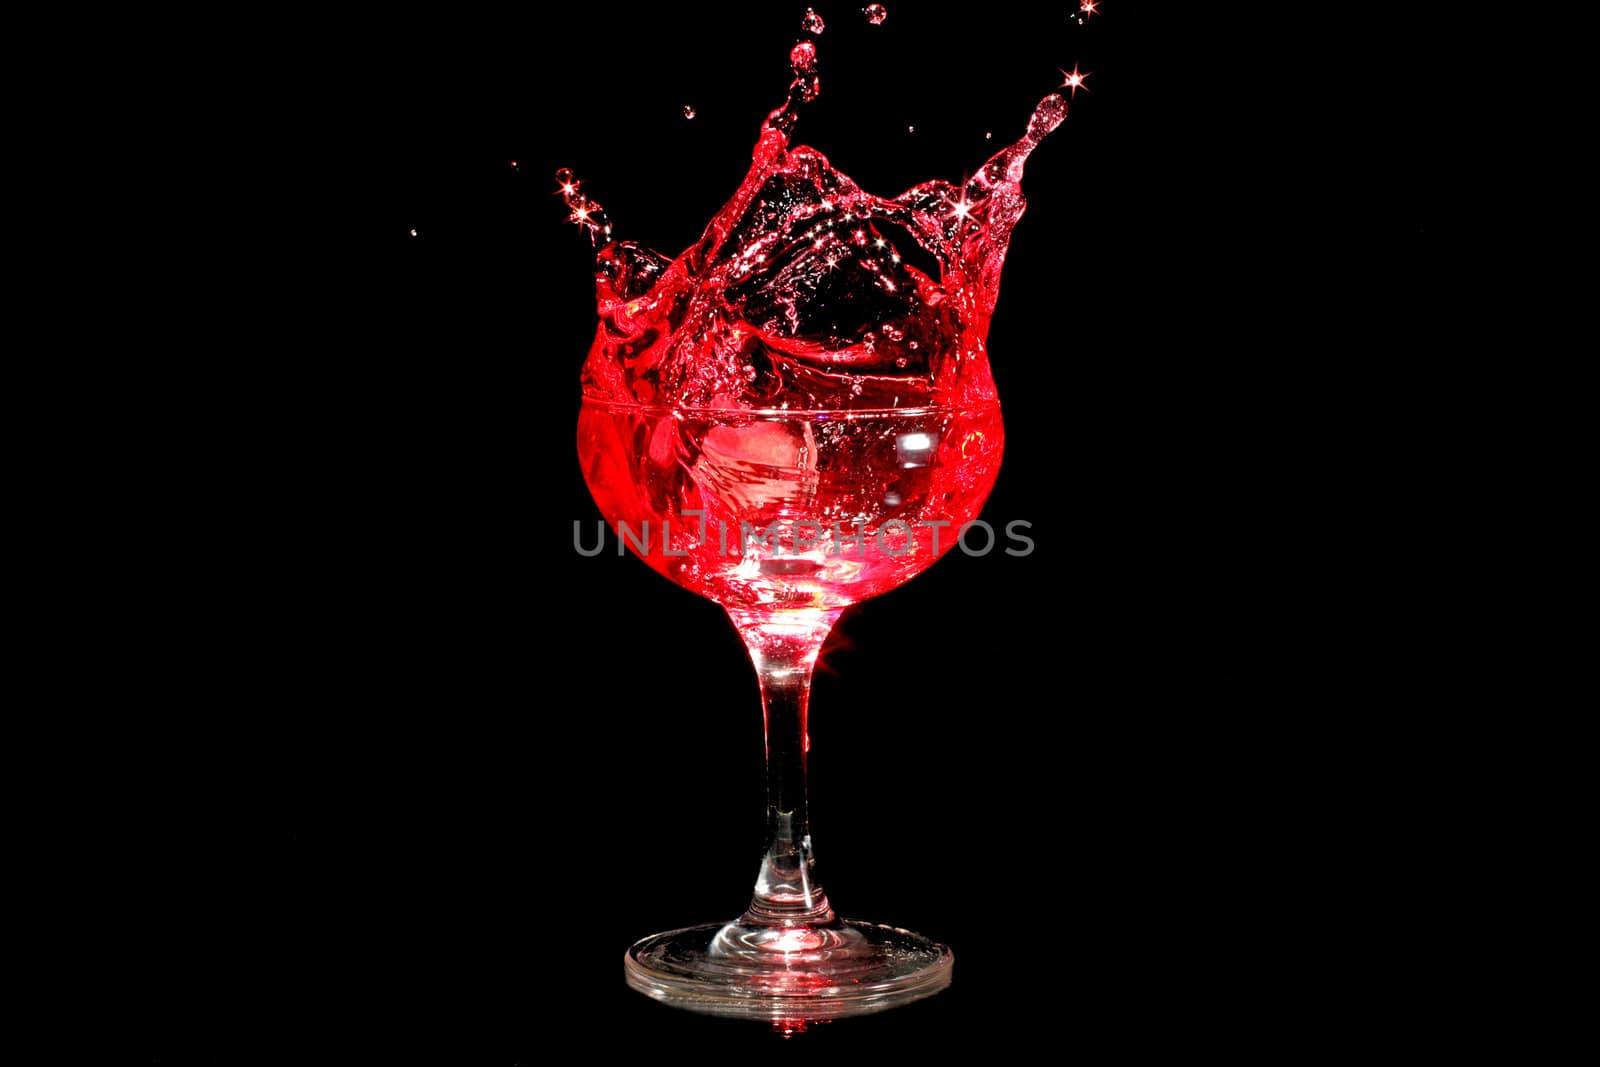 Ice cube splashing in a glass of wine